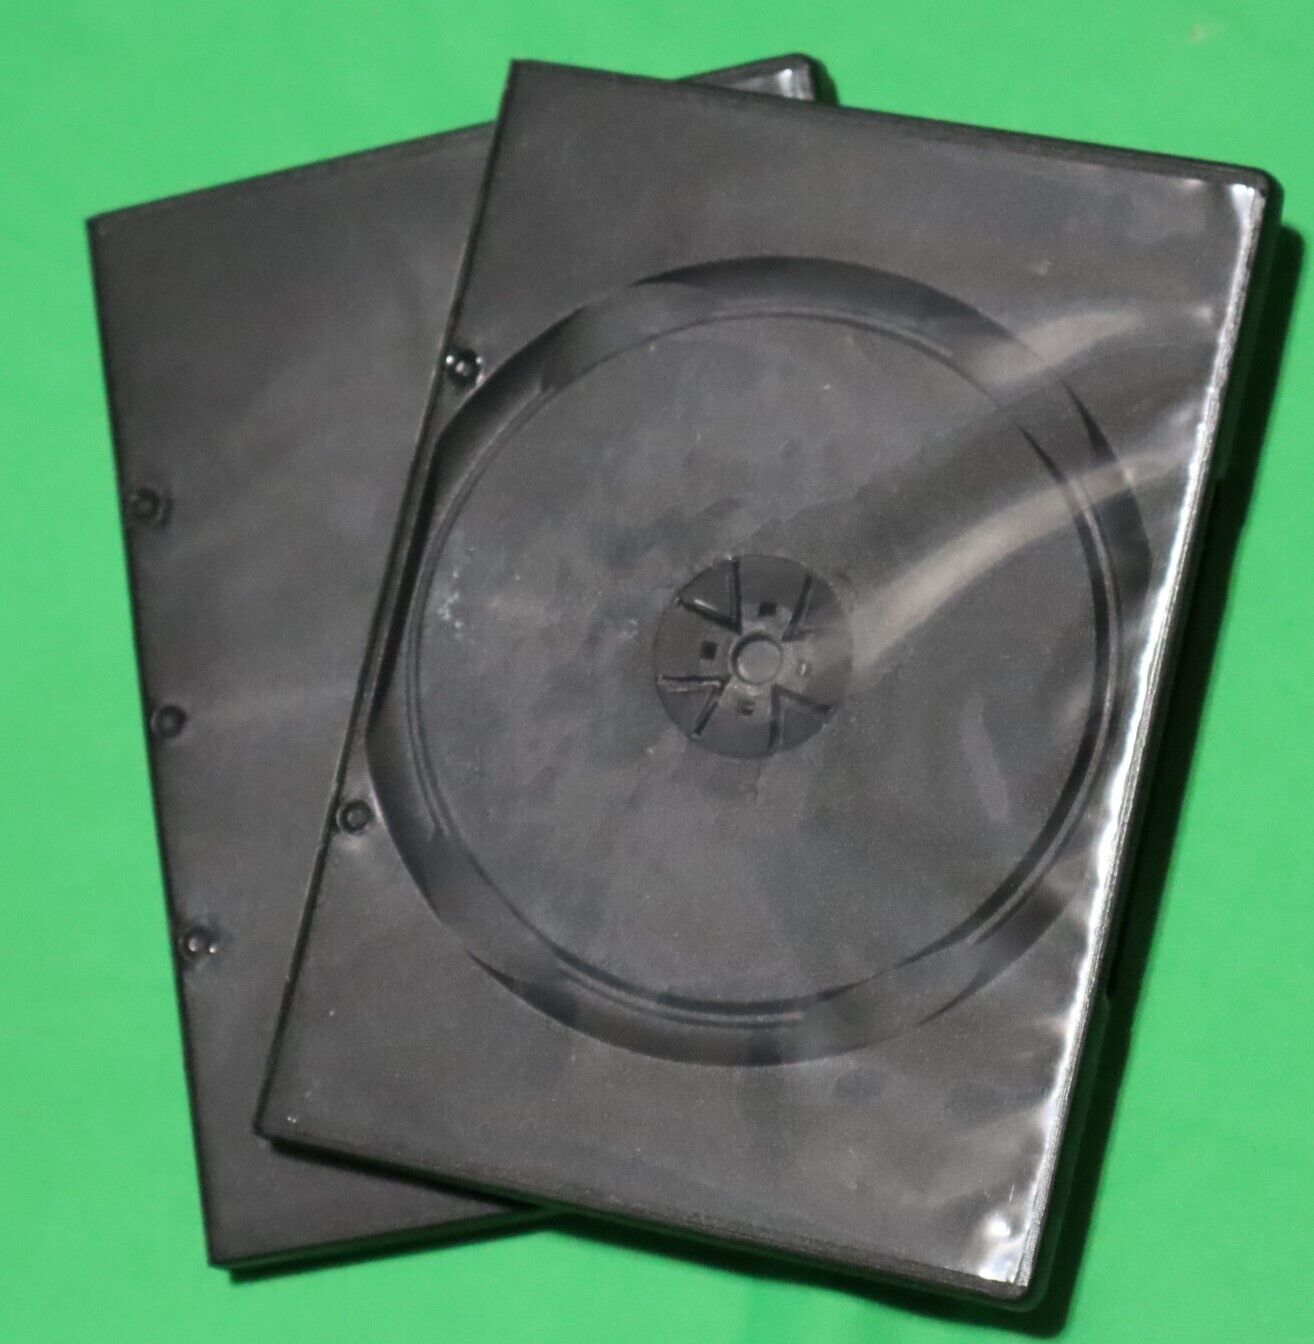 OEM PREMIUM STANDARD 14mm Single CD/DVD/Game Media Cases - 2 Pack